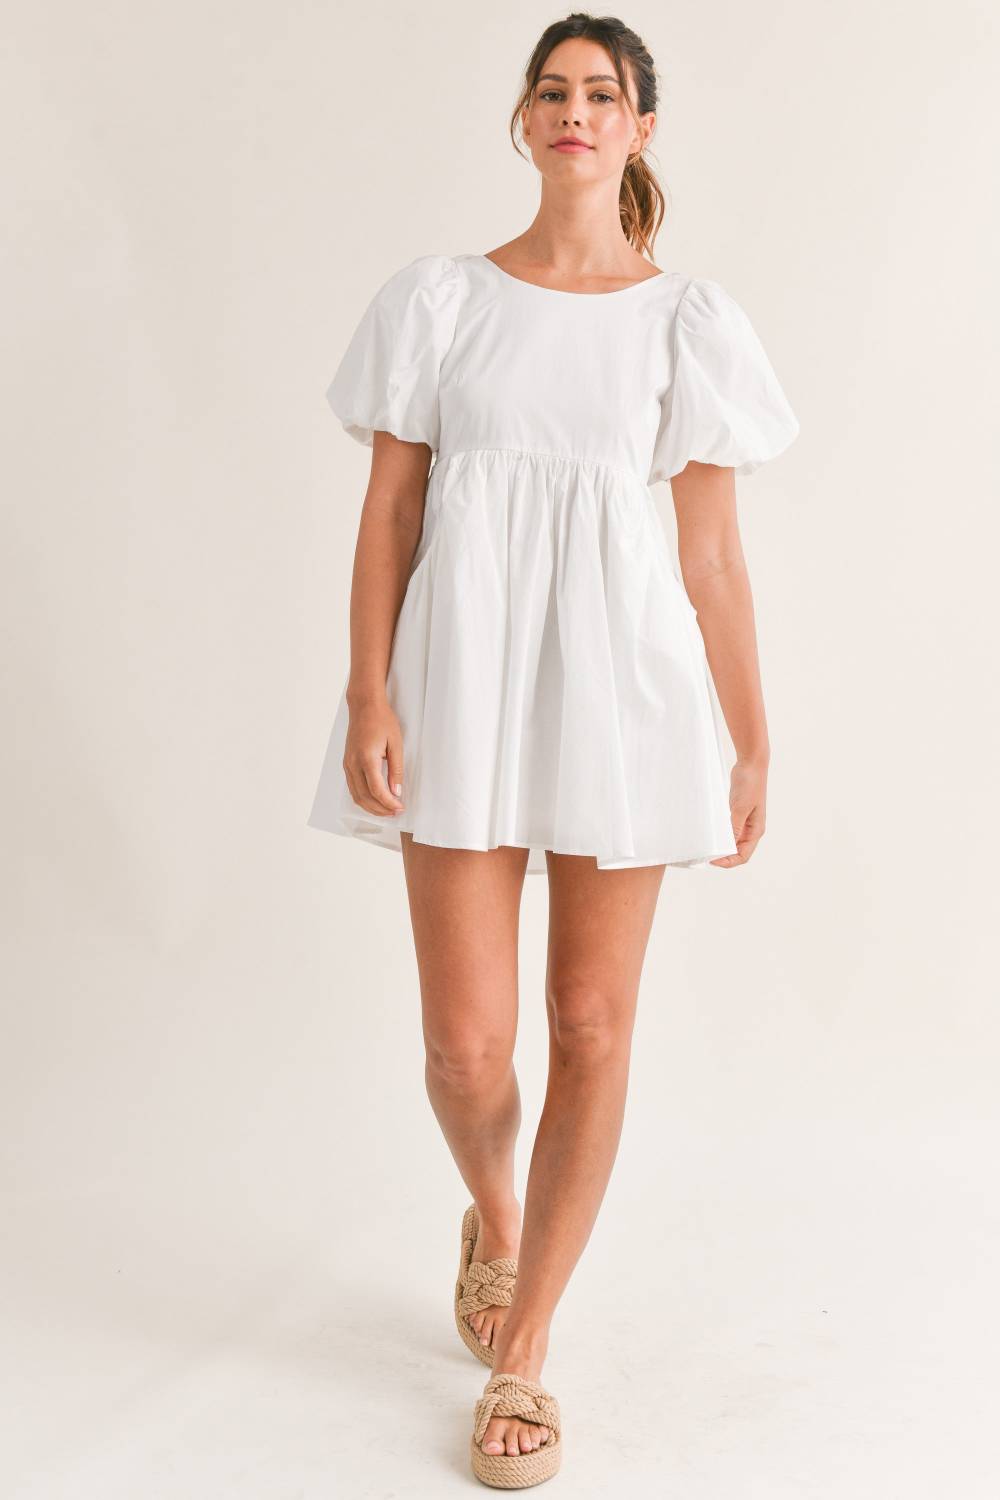 Evercado - Mini-robe en popeline avec poches latérales